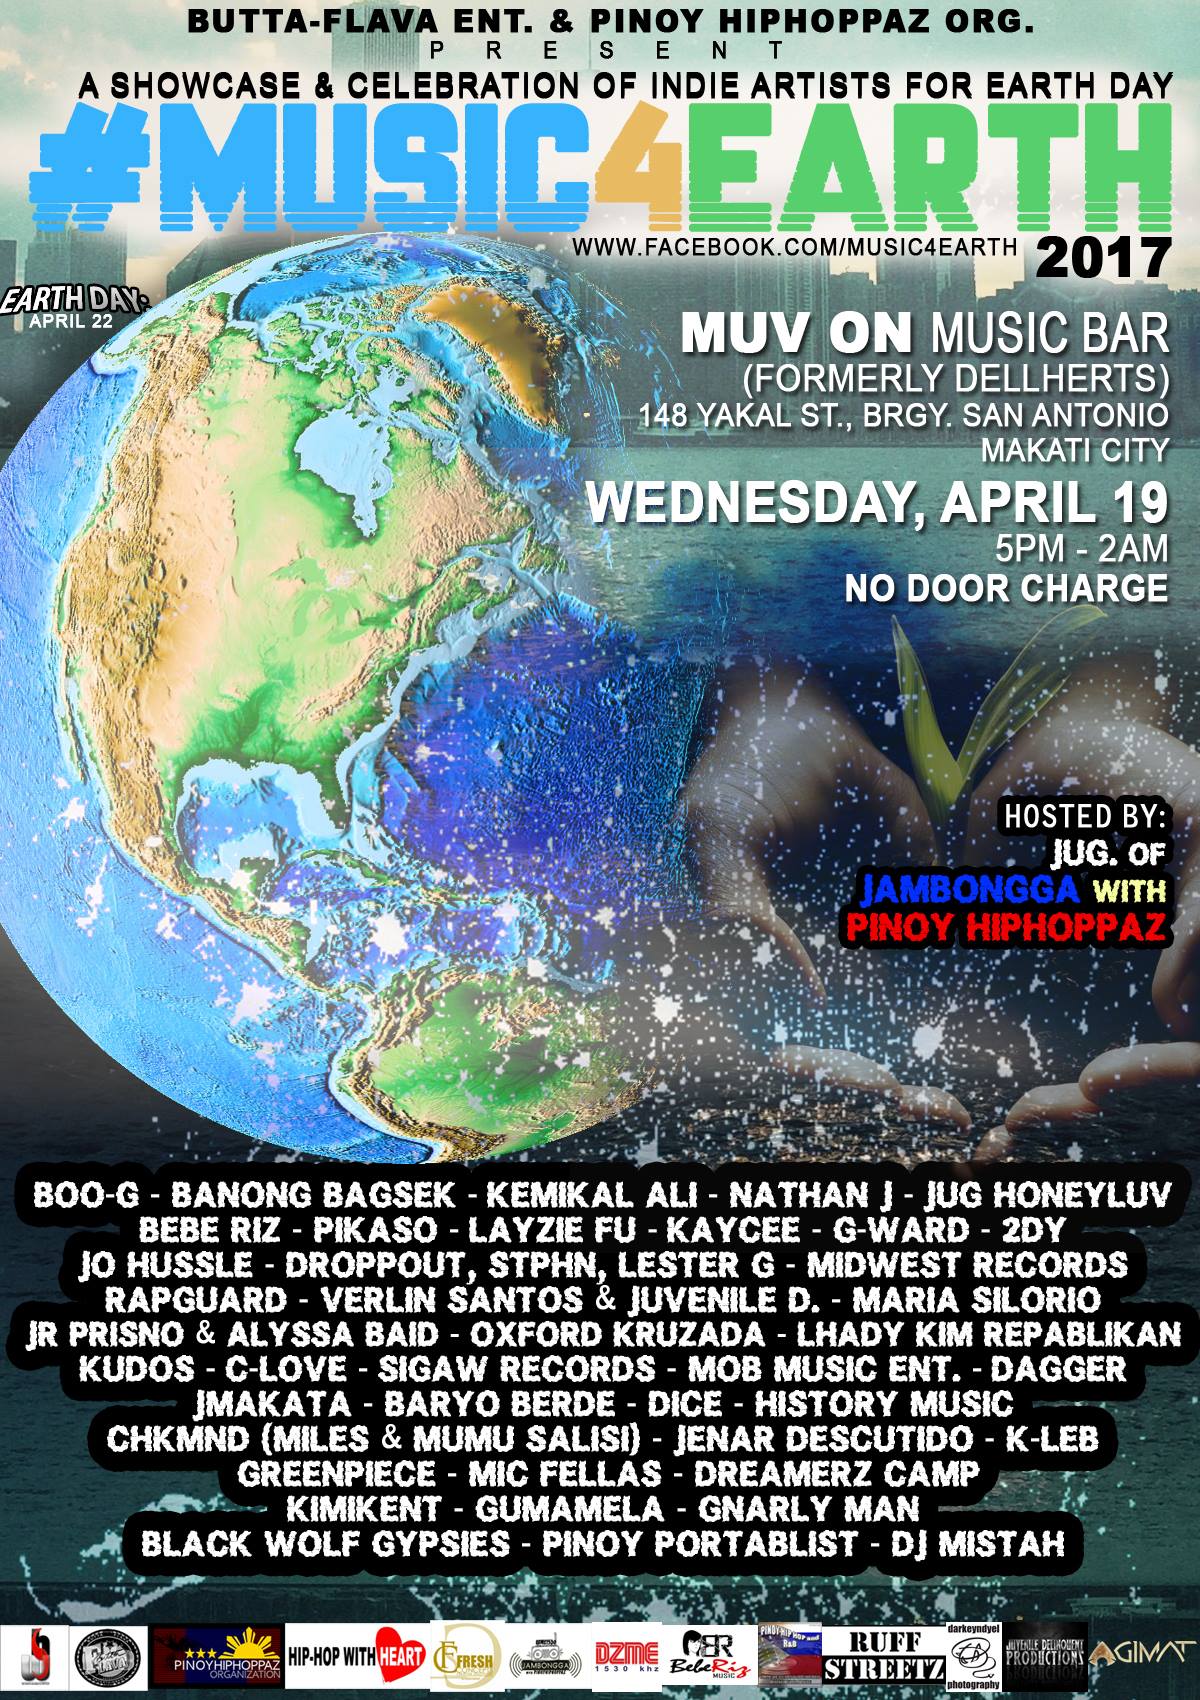 Music4Earth: An Earth Day Celebration & Showcase Page Liked · April 11 · Edited · The FINAL poster for #Music4Earth2017 happening on Wed., April 19, 5pm to 2am at MUV On Music Bar (formerly Dellherts). FREE entrance! #showcase #celebration #indie #underground #musicians #rappers #worldearthday #share #spread #support #bfe #phh #wbh #oldskul #newskul #band #turntablists #portablists #mcs #bboys #openmichype Designed by Bebe Riz of Fresh Concepts Creative Solutions. RSVP/Map/Directions/Performers: Music 4 Earth 2017 — with Bebe Riz, Jug Honeyluv, Jack Ladymasta, Dreamerz Camp, Peter Benjamen Cipriano Cabria II, Lawrence Vinluan, Nathan Jay Marquez, KimiKent Rojas, Dos Zamora, Paolo Morasa, Jayvid Strike Garon-Nava, Gumamela Frommanila, Vonnie Audap, Ron Allen Salanga, Von Vaugn, Bruthal G X JhumarHall, Vener Torres, Adrian Mistah Umengan, Owell Padilla, Briggoson Alonzo Curugan, Crown Ocho Onse, Ryan Jay Julia Bartolo, William Trauma, Trezeverbo Mercado, BJ Maralit, Jey Ouz, Dredd Villamor Dongon, John Ederly Dalena, Christopher Destura, Roland Maye, Bryan Paul Duke Fernandez, Art Errol, John Mark Patiga Cruz, Ralph Diocson Juachon, Joseph James Villena Salvador, Leslie Djleslie Gonzales, Oxford Kruzada, Derwin Padilla, Boo-g Dft, Johnny Domingo, Zandro Ochomil Verula, Mark Francis L Josue, Mick Ryan De Leon, Ryan Syper Wun Delizo, Fidel T. Fortitudo, Joboss Cambodia, Karvine Alova, Honourable Kemikal Ali, Jojo Garcia Venturina, Rickman Rajkillaz, Kaizer Abad Tampol, Duke Ricafort, Marklee Ecko Avecilla, Jhonjhon Papa, Mark Millan Gomez, Denmark Tuazon Repuyan, Lubyo Armstrong, Dice Ddk Alarca, Ron Jefferson Zapanta Perez, Jr Prisno, Kim Serrano, Velasquez OG, Bryan Pernis, Jeanpaul Urlanda, Dondee Aloran Biscocho, Theo Robles Ramirez, Albert Russel, Ryan Ching, Enrico Karamihan Cruz, Don Canasa, Alyssa CHii, Iam C-love, Lester Guerrero, Argarin Dos, Braduzz Zon Yusi, Allen Wrathsol Bonifacio, Ying Yang DjMistah, Bullet Ryan, Vince Dominic Marasigan, Jiggerr